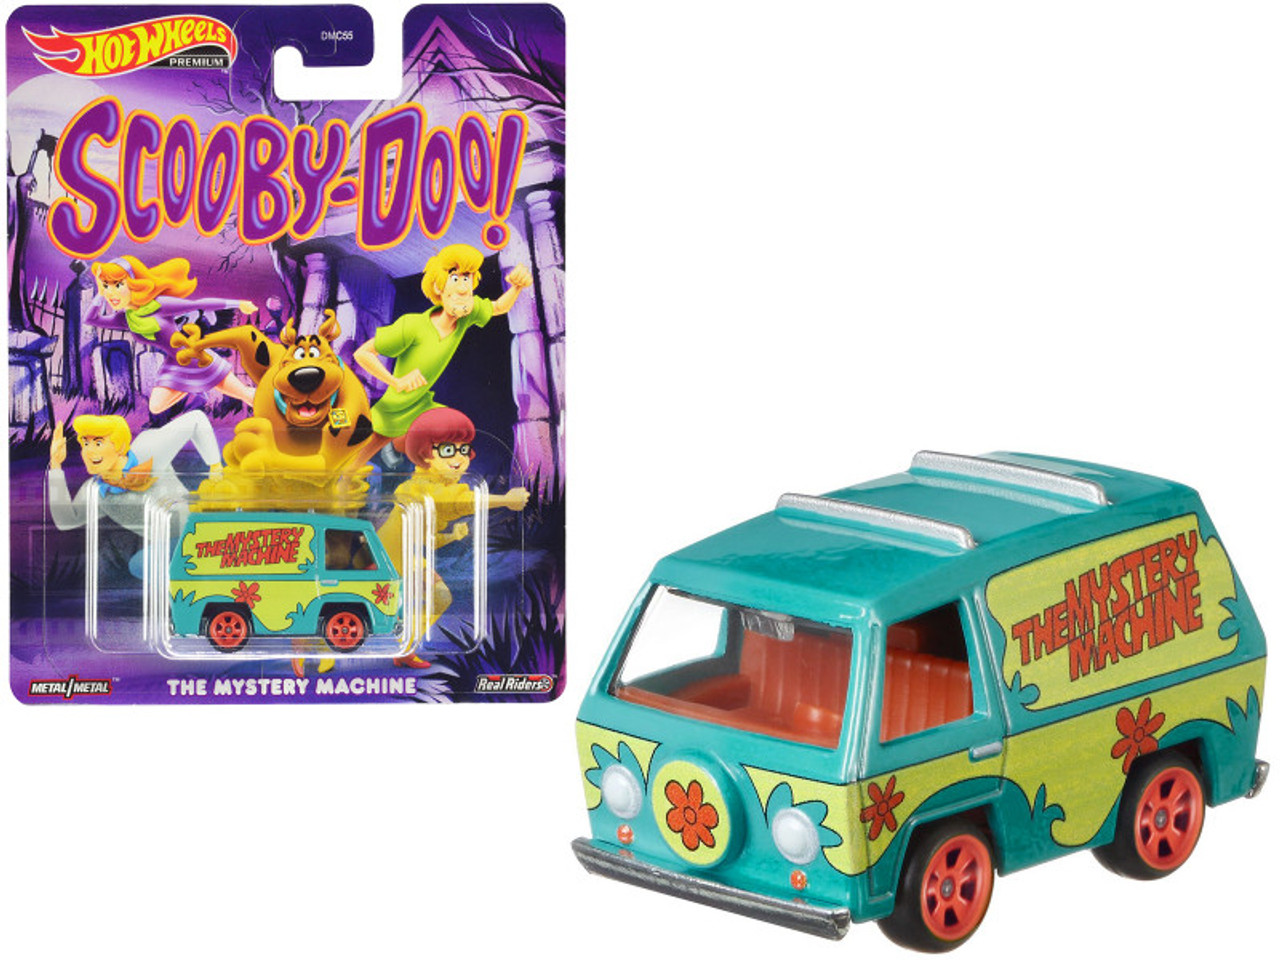 The Mystery Machine Van "Scooby-Doo!" TV Series Diecast Model Car by Hot Wheels